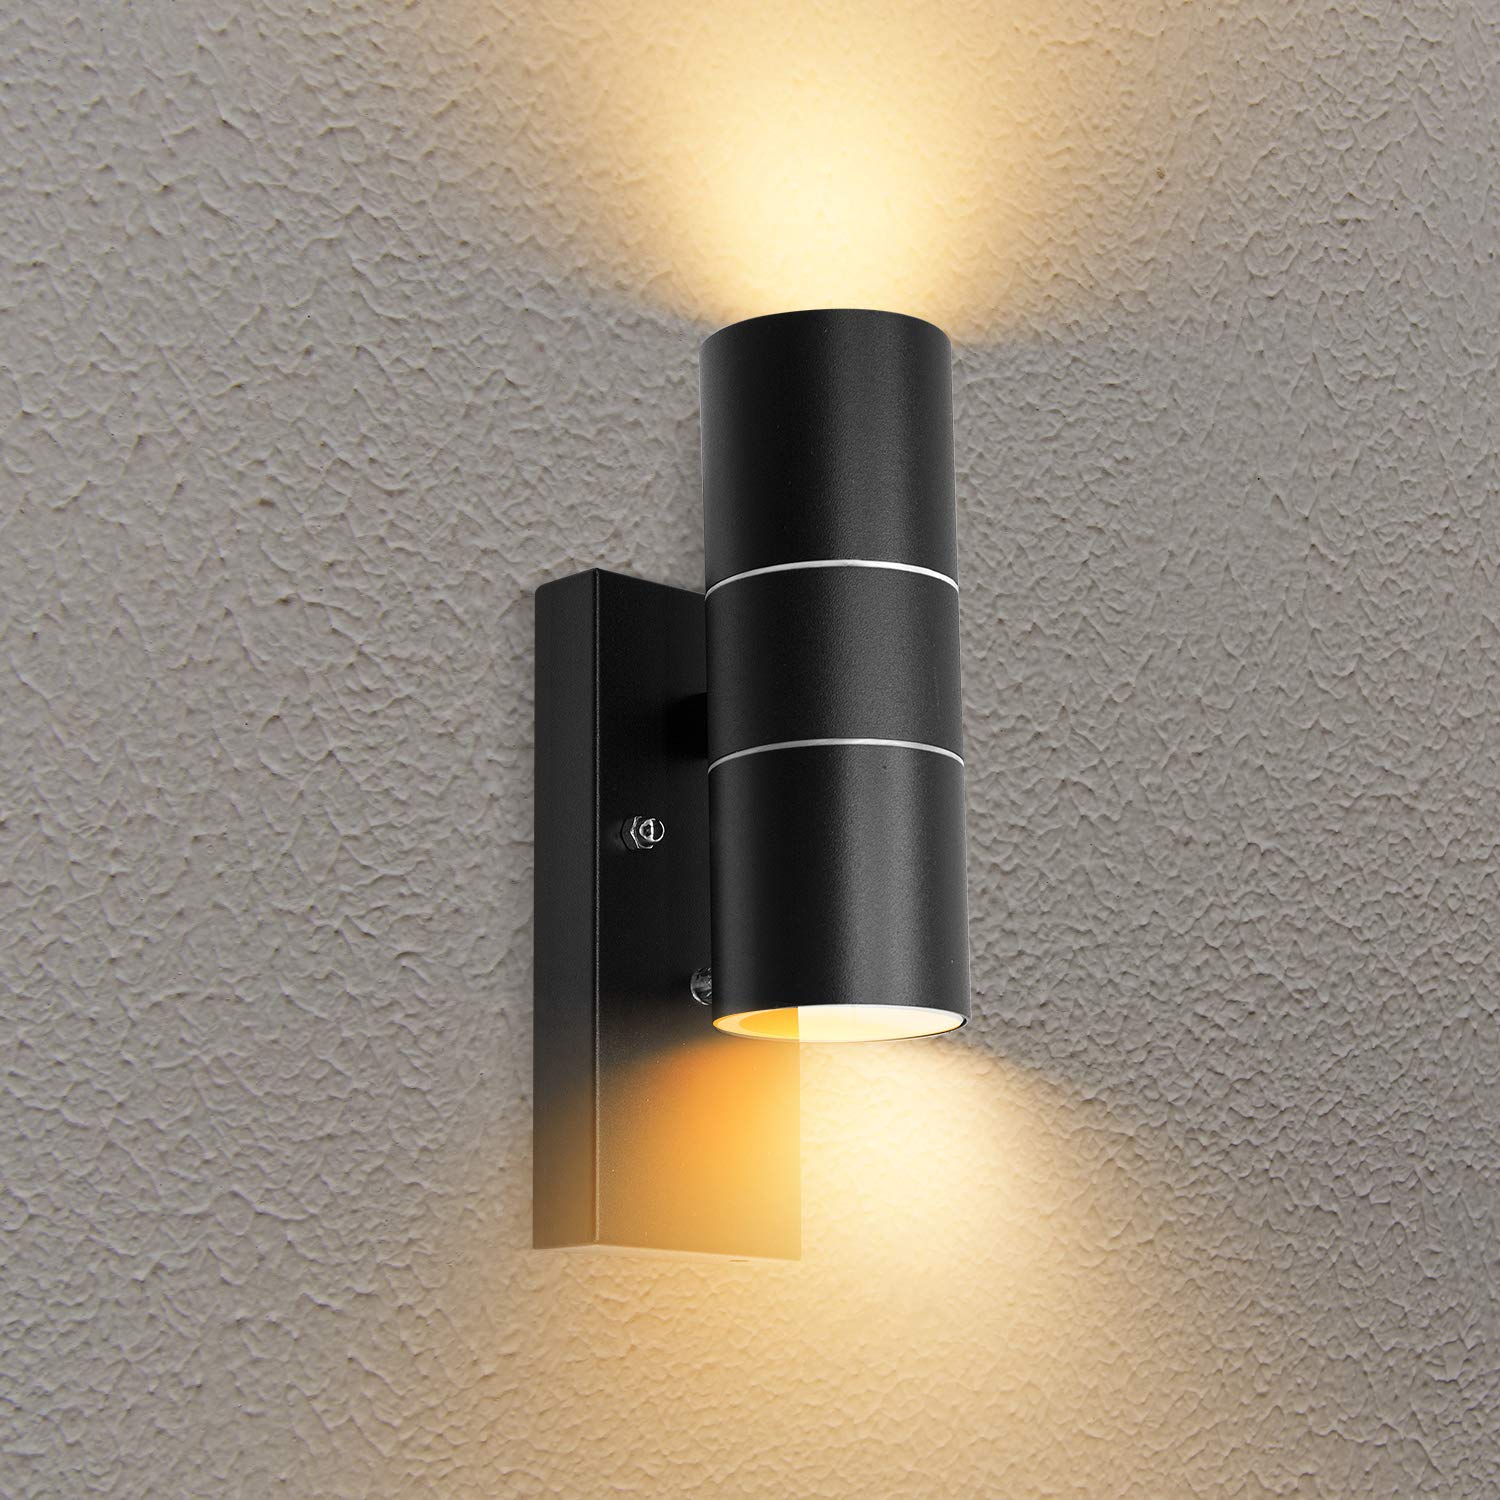 Wondlumi Dusk Till Dawn Sensor Wall Light Outdoor Up Down Lights IP44 Outside Wall Sconces Black 240V - Incl. 2X 5W LED Bulbs Warm White